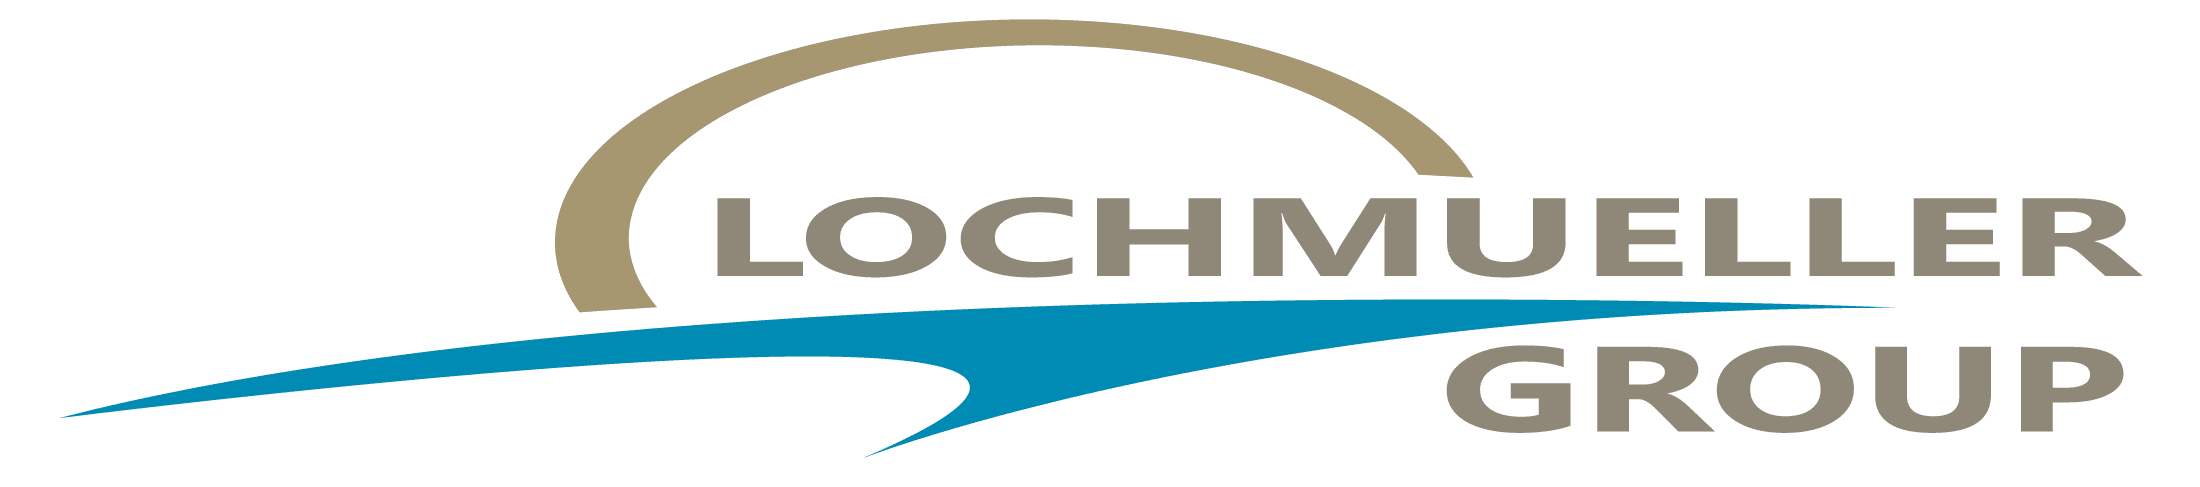 Lochmueller Group Company Logo